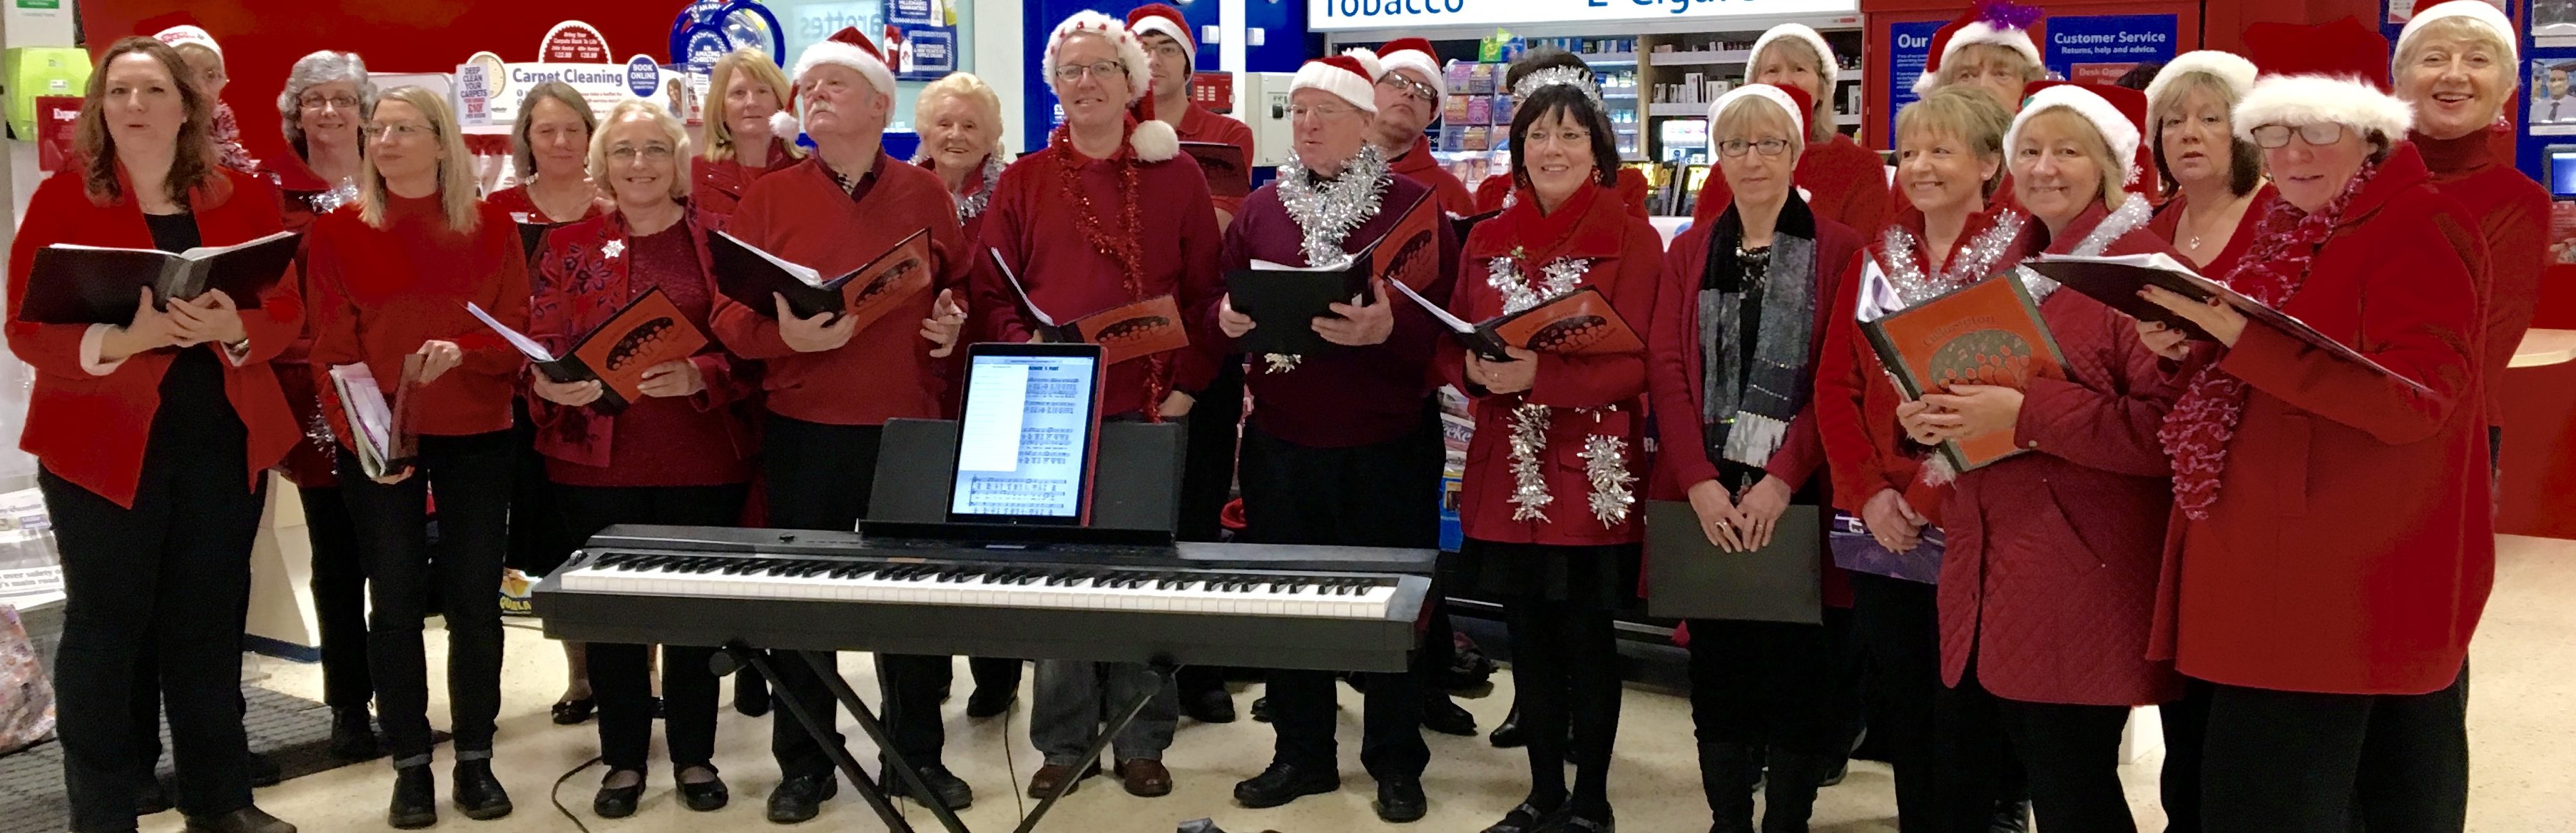 Cullompton Community choir singing Christmas carols at Tesco 2016